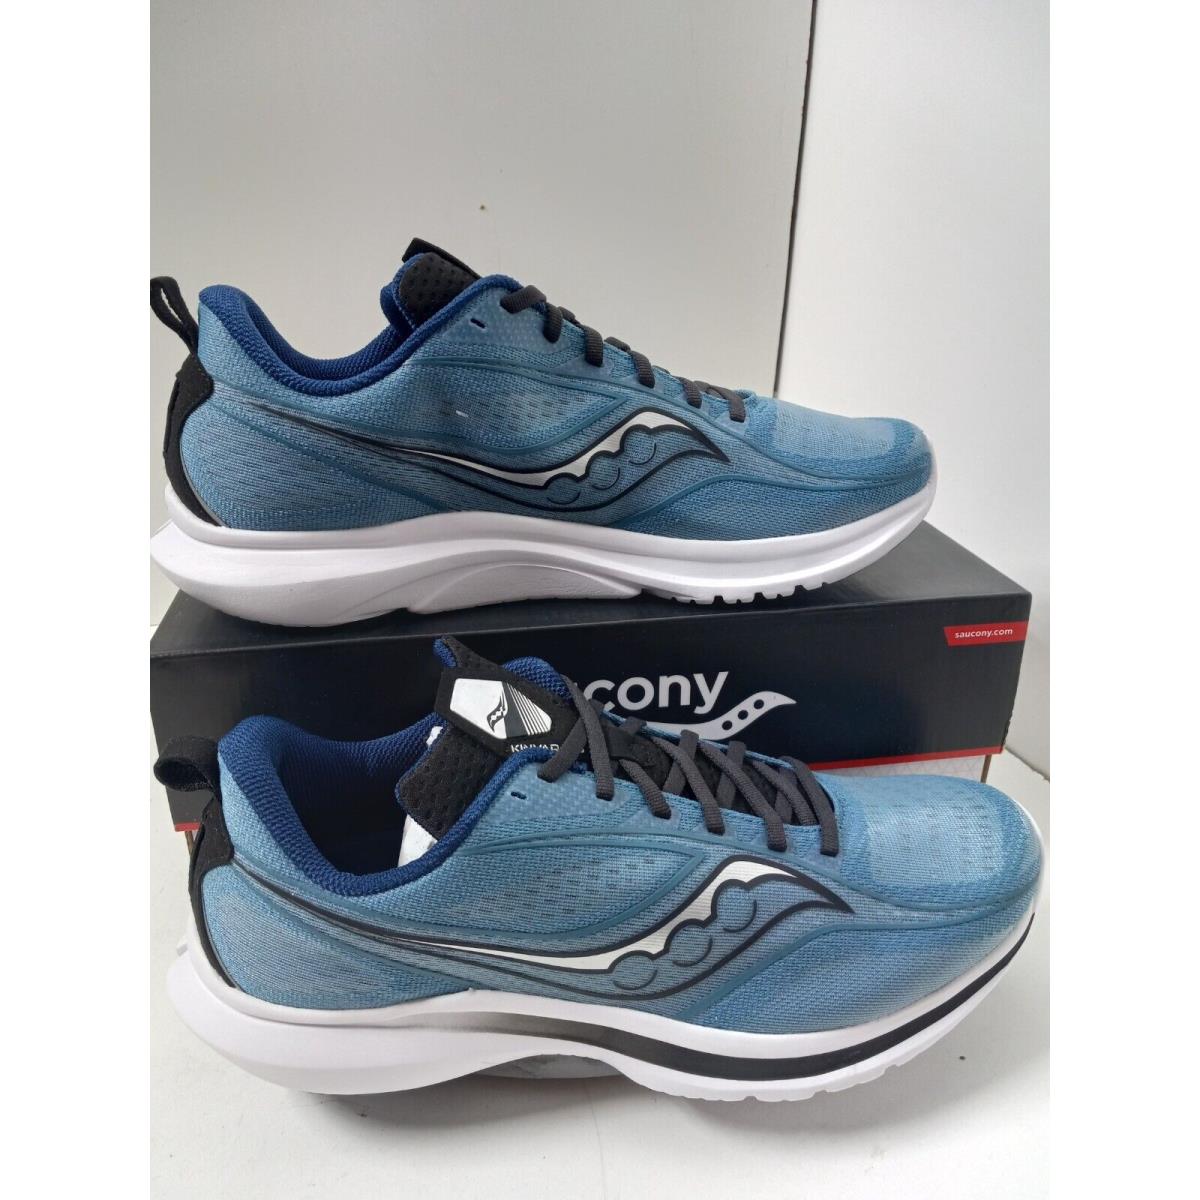 Saucony Kinvara 13 Blue Mist Black Running Shoes Mens Size 11.5